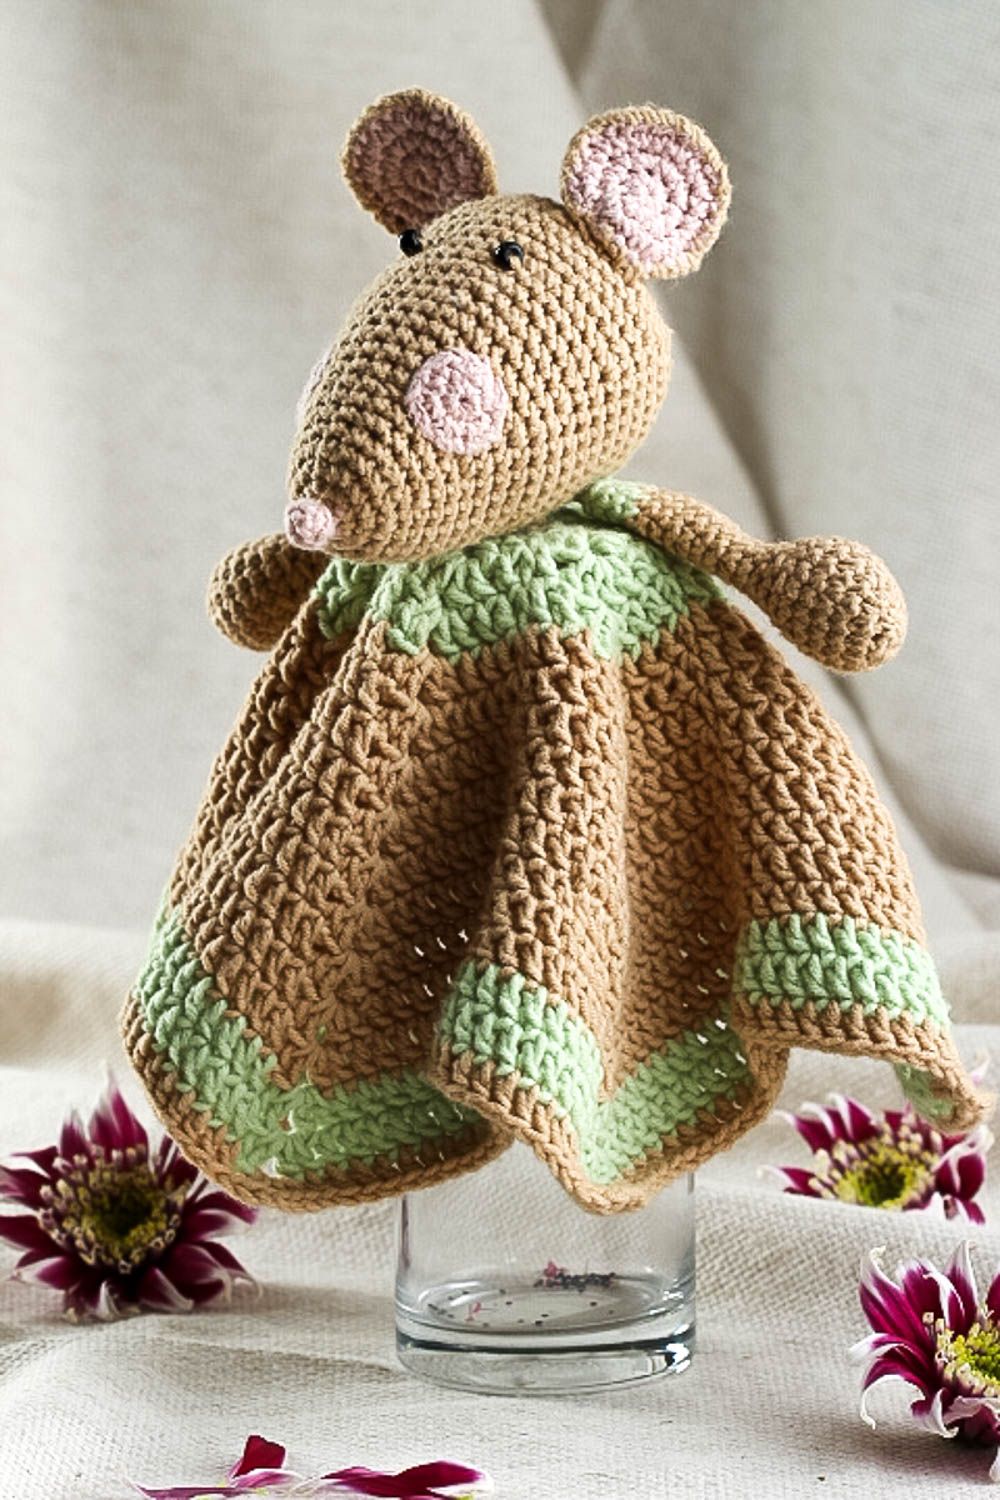 Handmade crocheted toy for babies nursery decor ideas stuffed toy for children photo 1